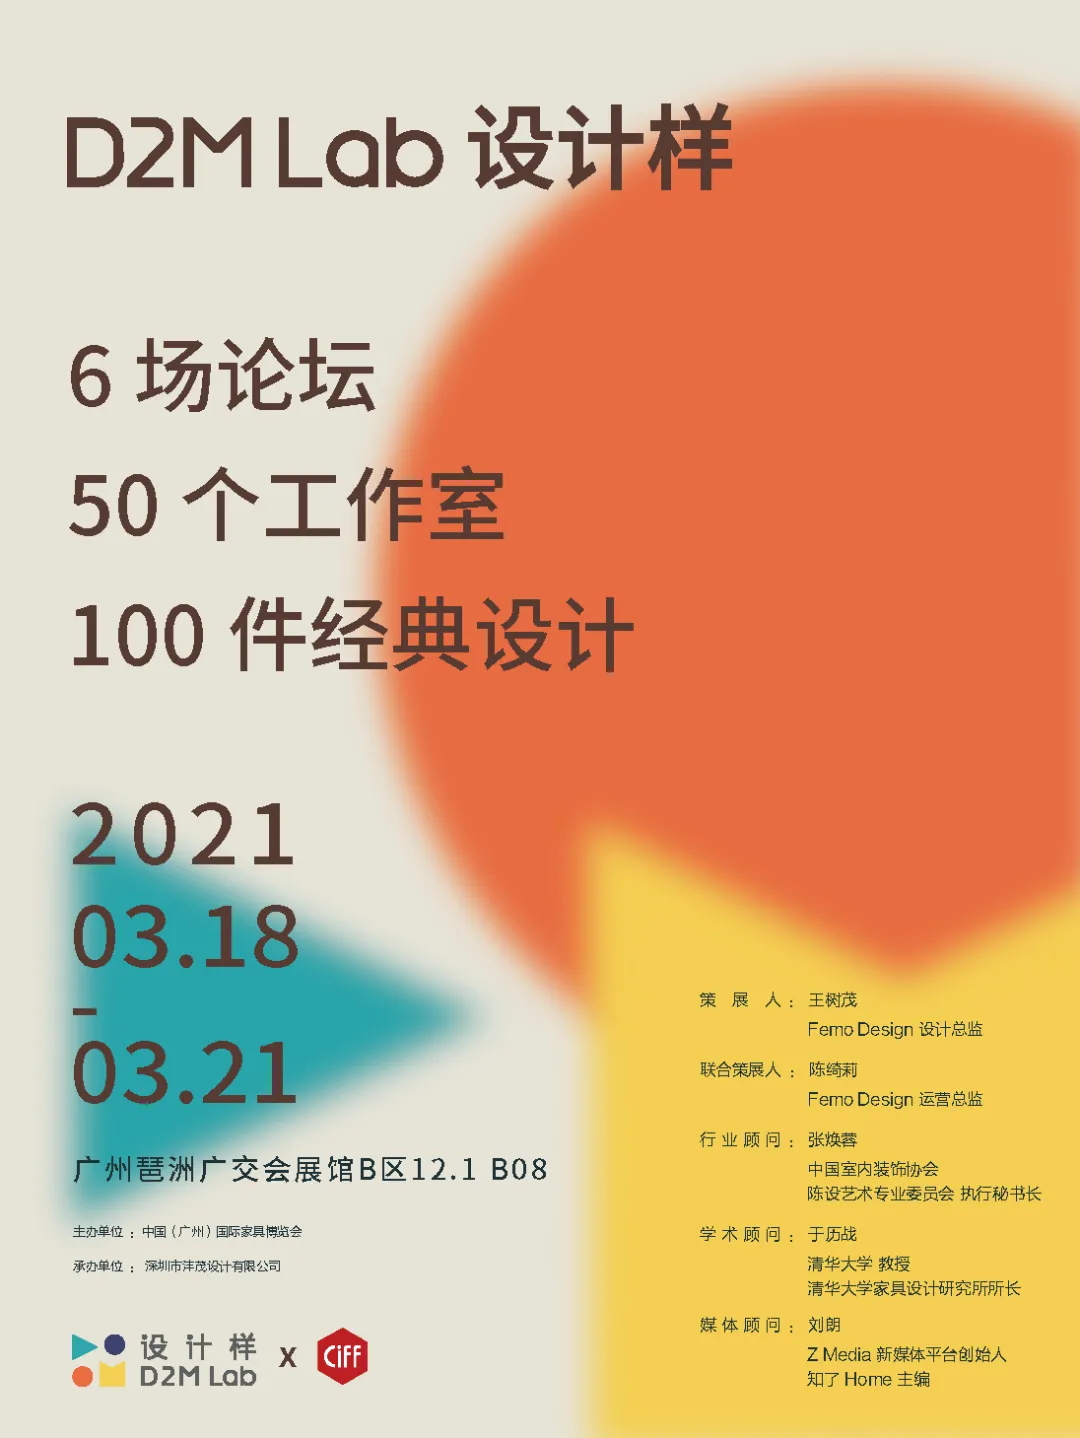 D2M Lab 设计样广州家博会3月首秀 链接全球设计交易